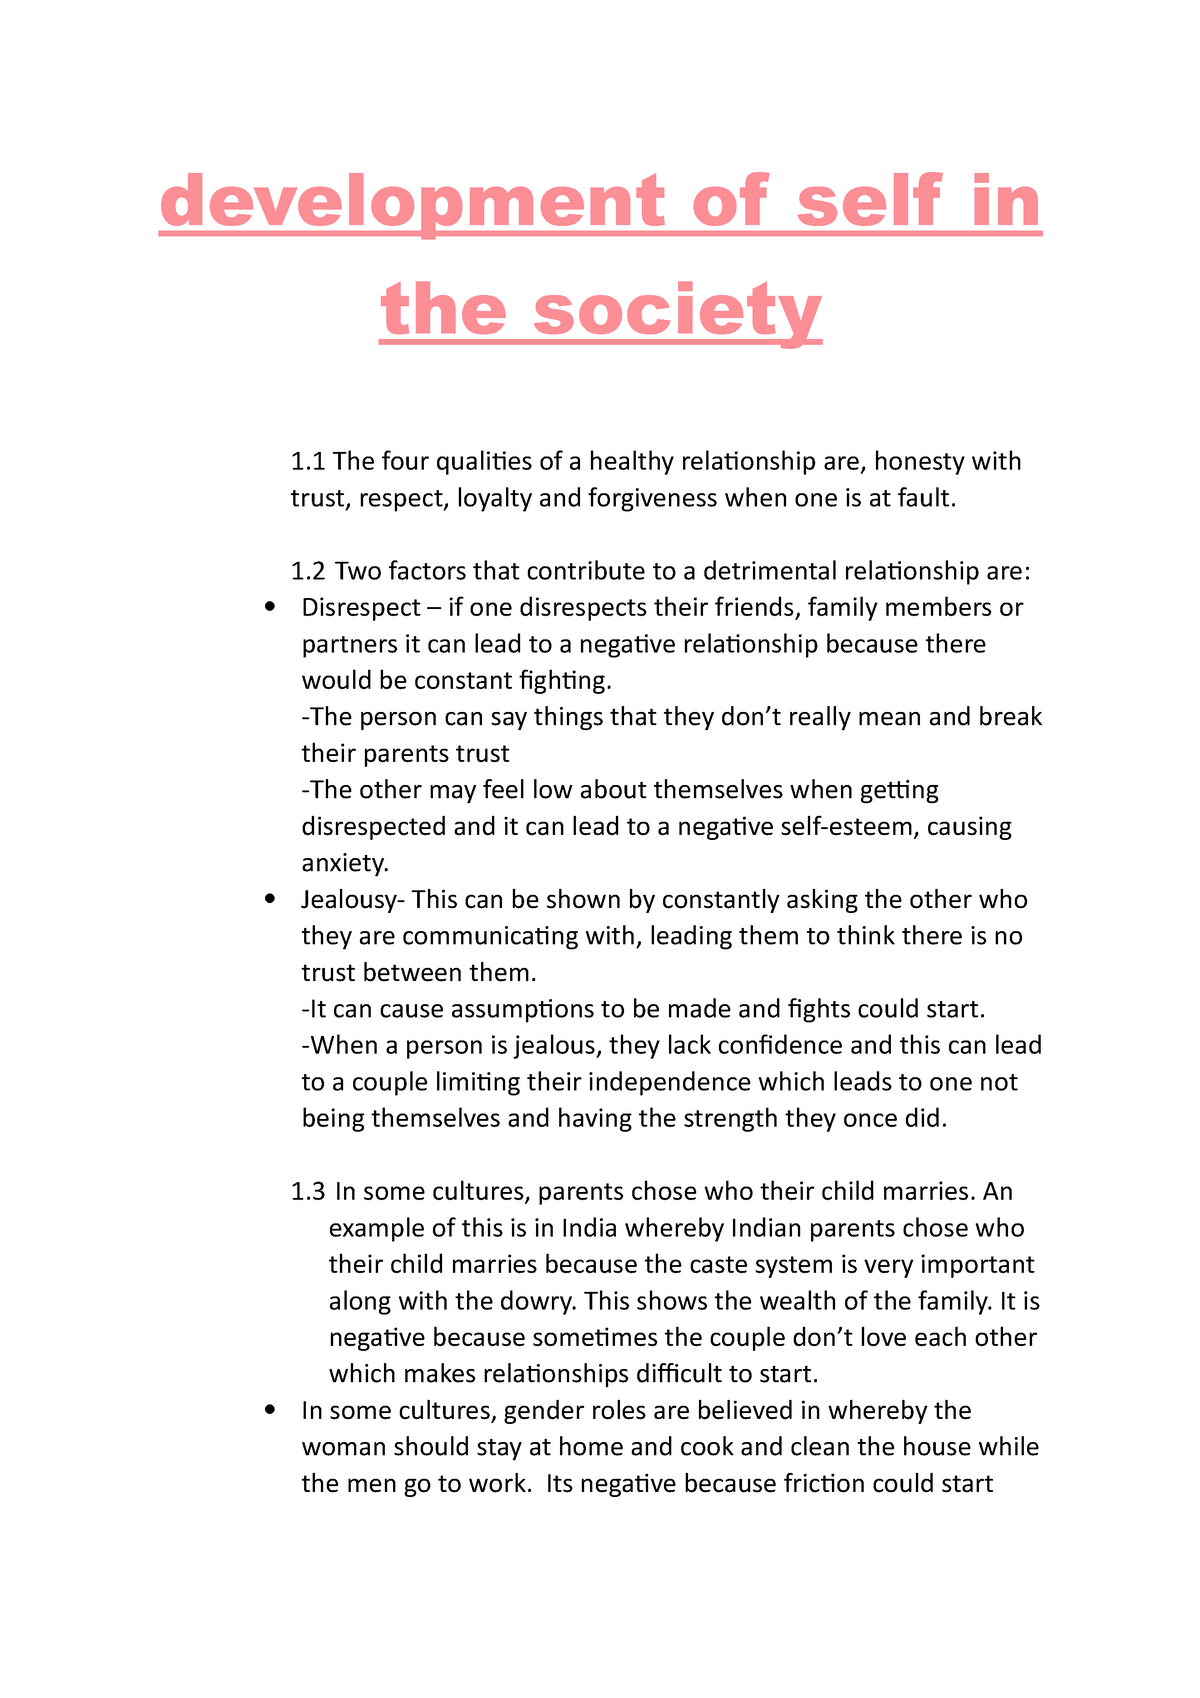 development of self in society essay grade 10